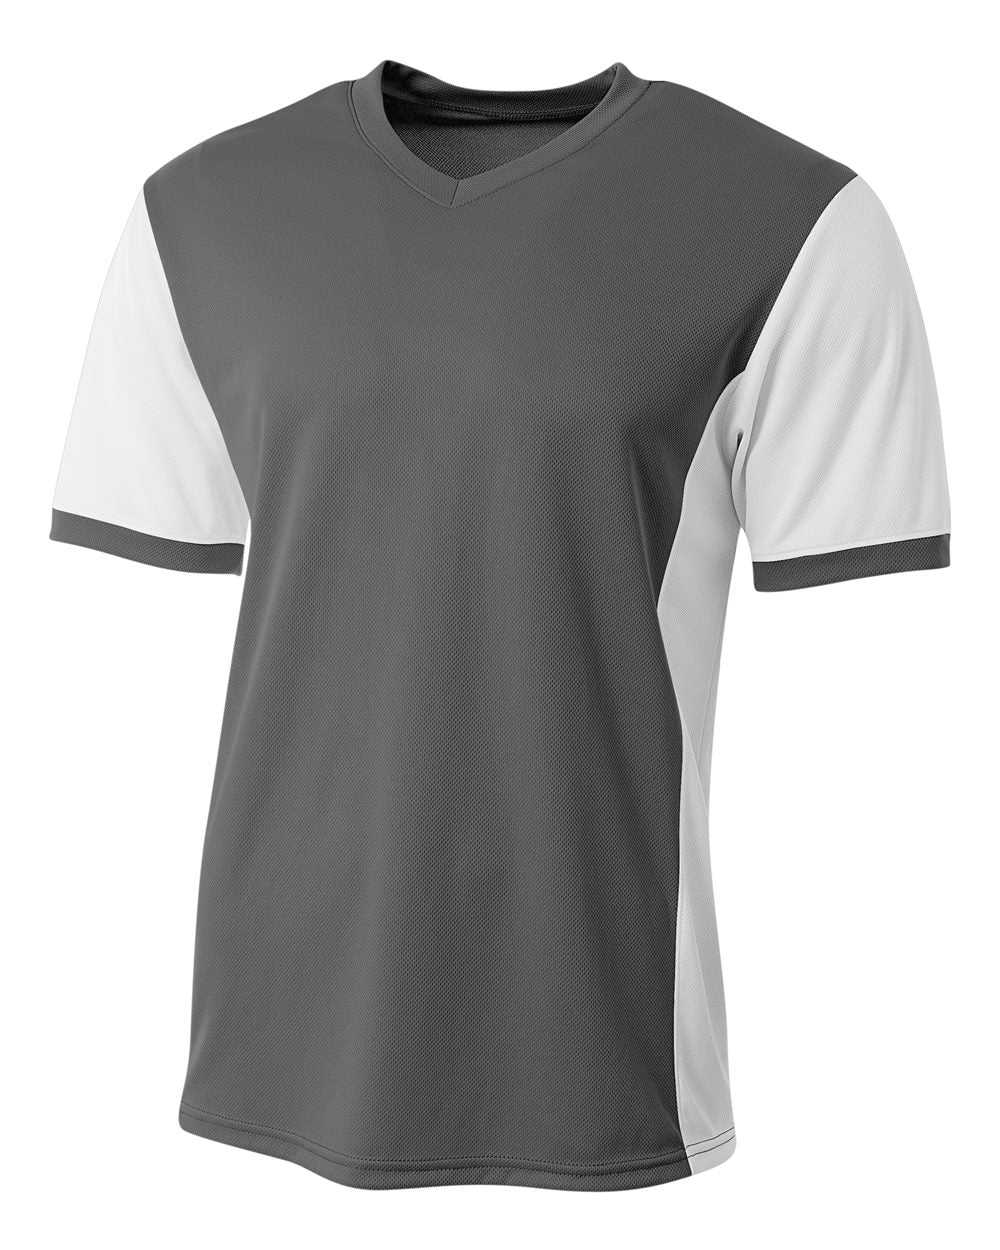 A4 NB3017 Premier Soccer Jersey - Graphite White - HIT a Double